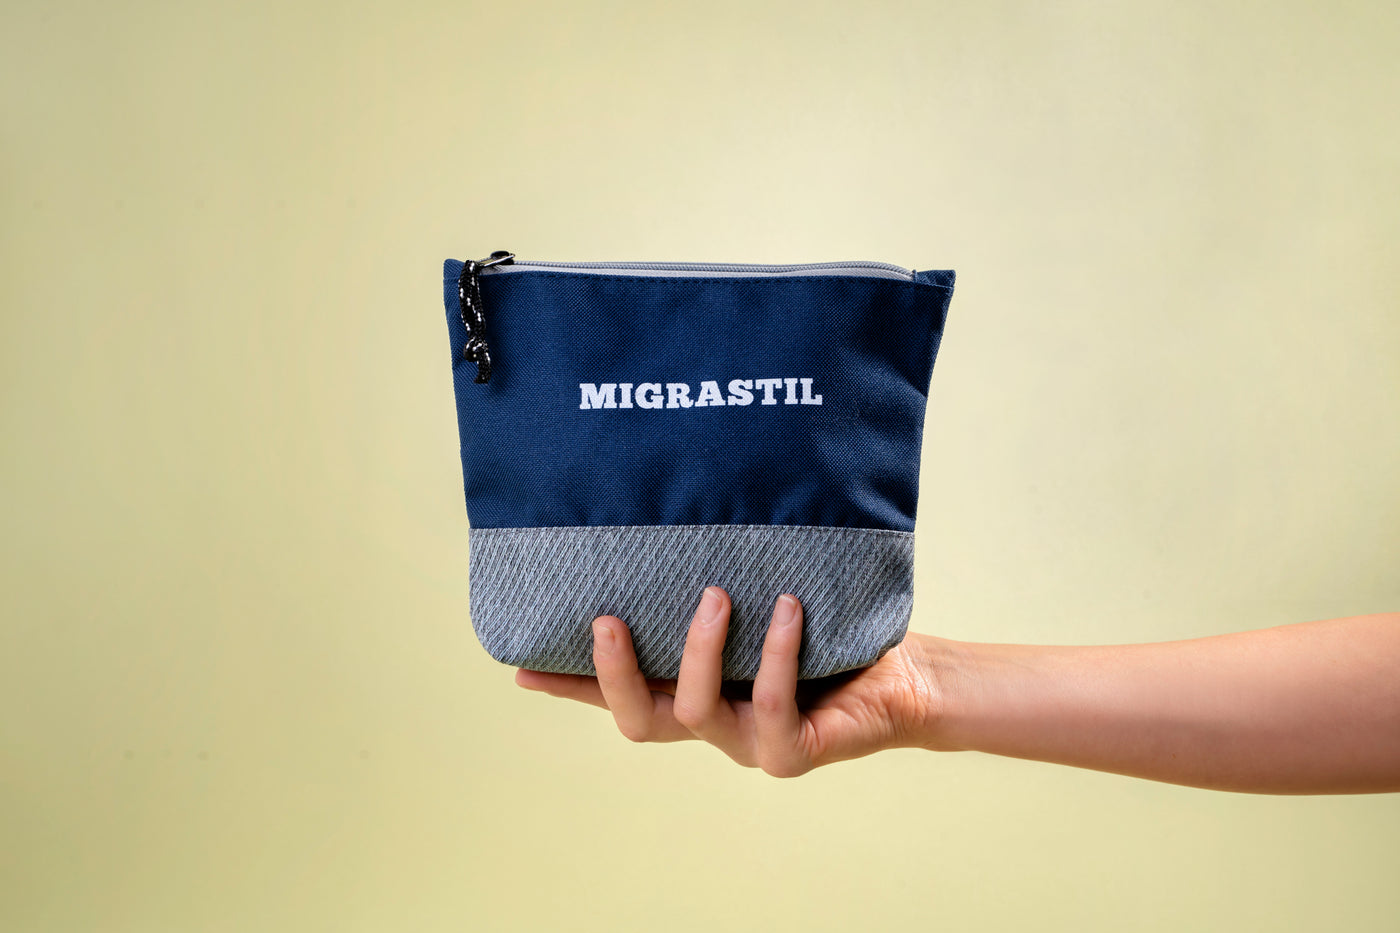 Migraine Travel Kit – Migrastil Natural Pain Relief